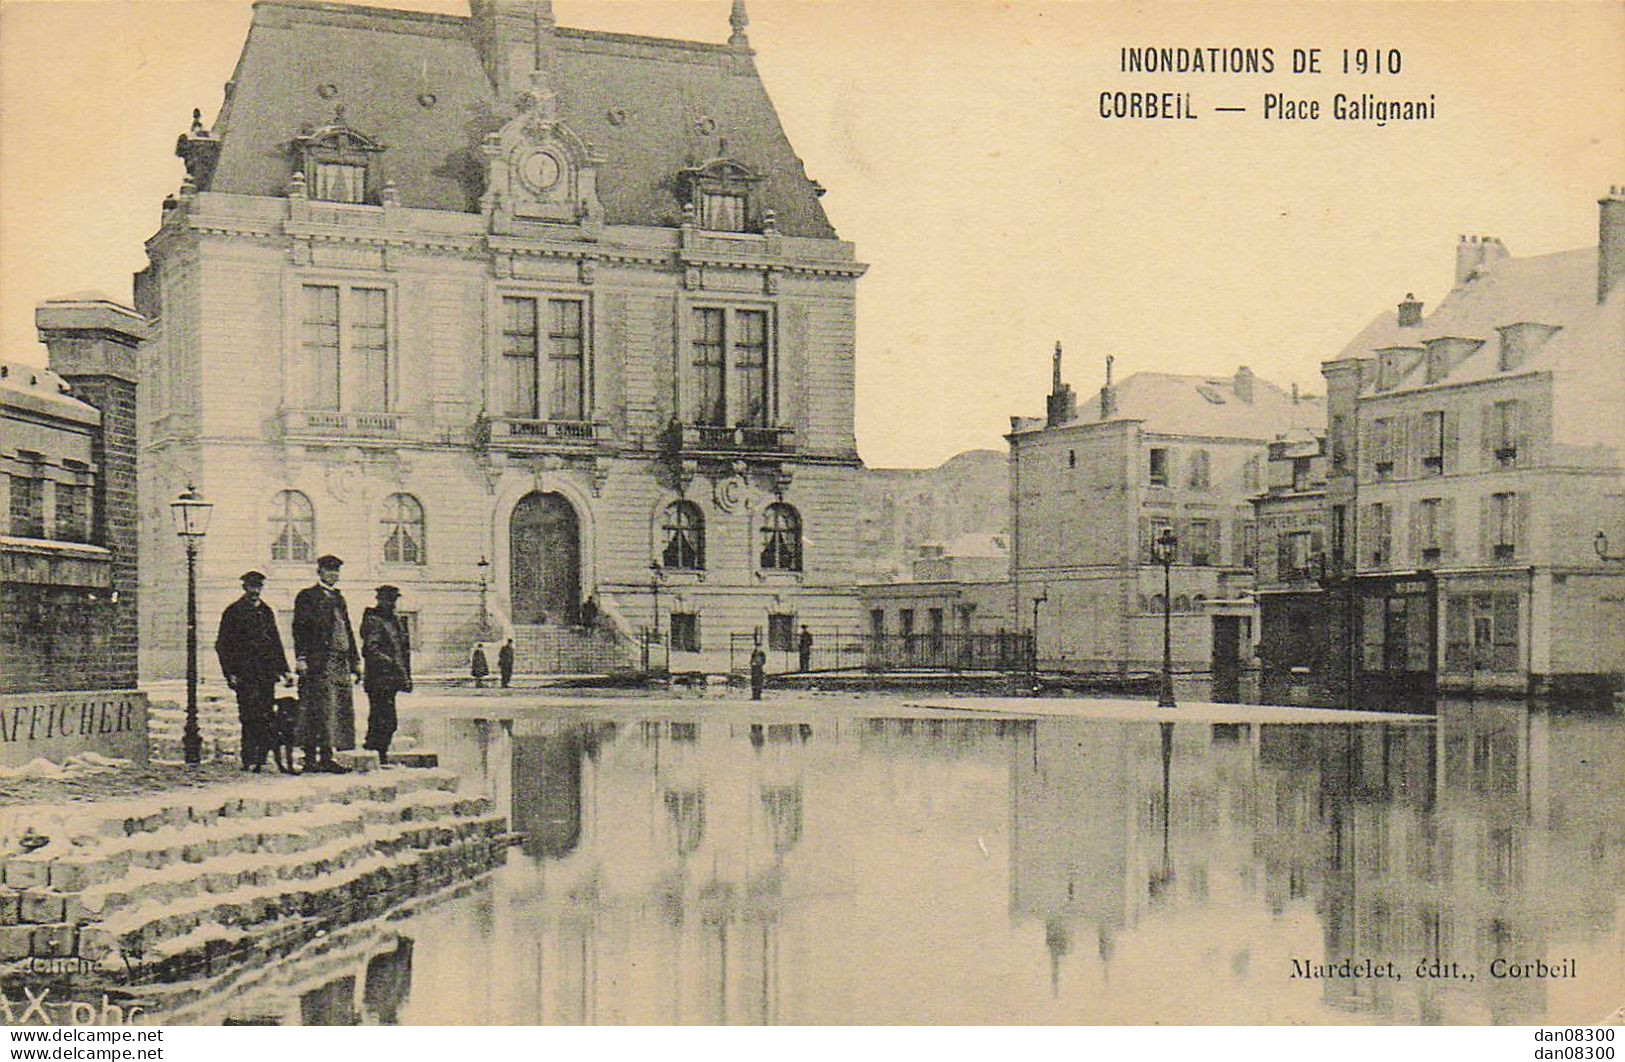 91 INONDATIONS DE 1910 CORBEIL PLACE GALIGNANI - Corbeil Essonnes